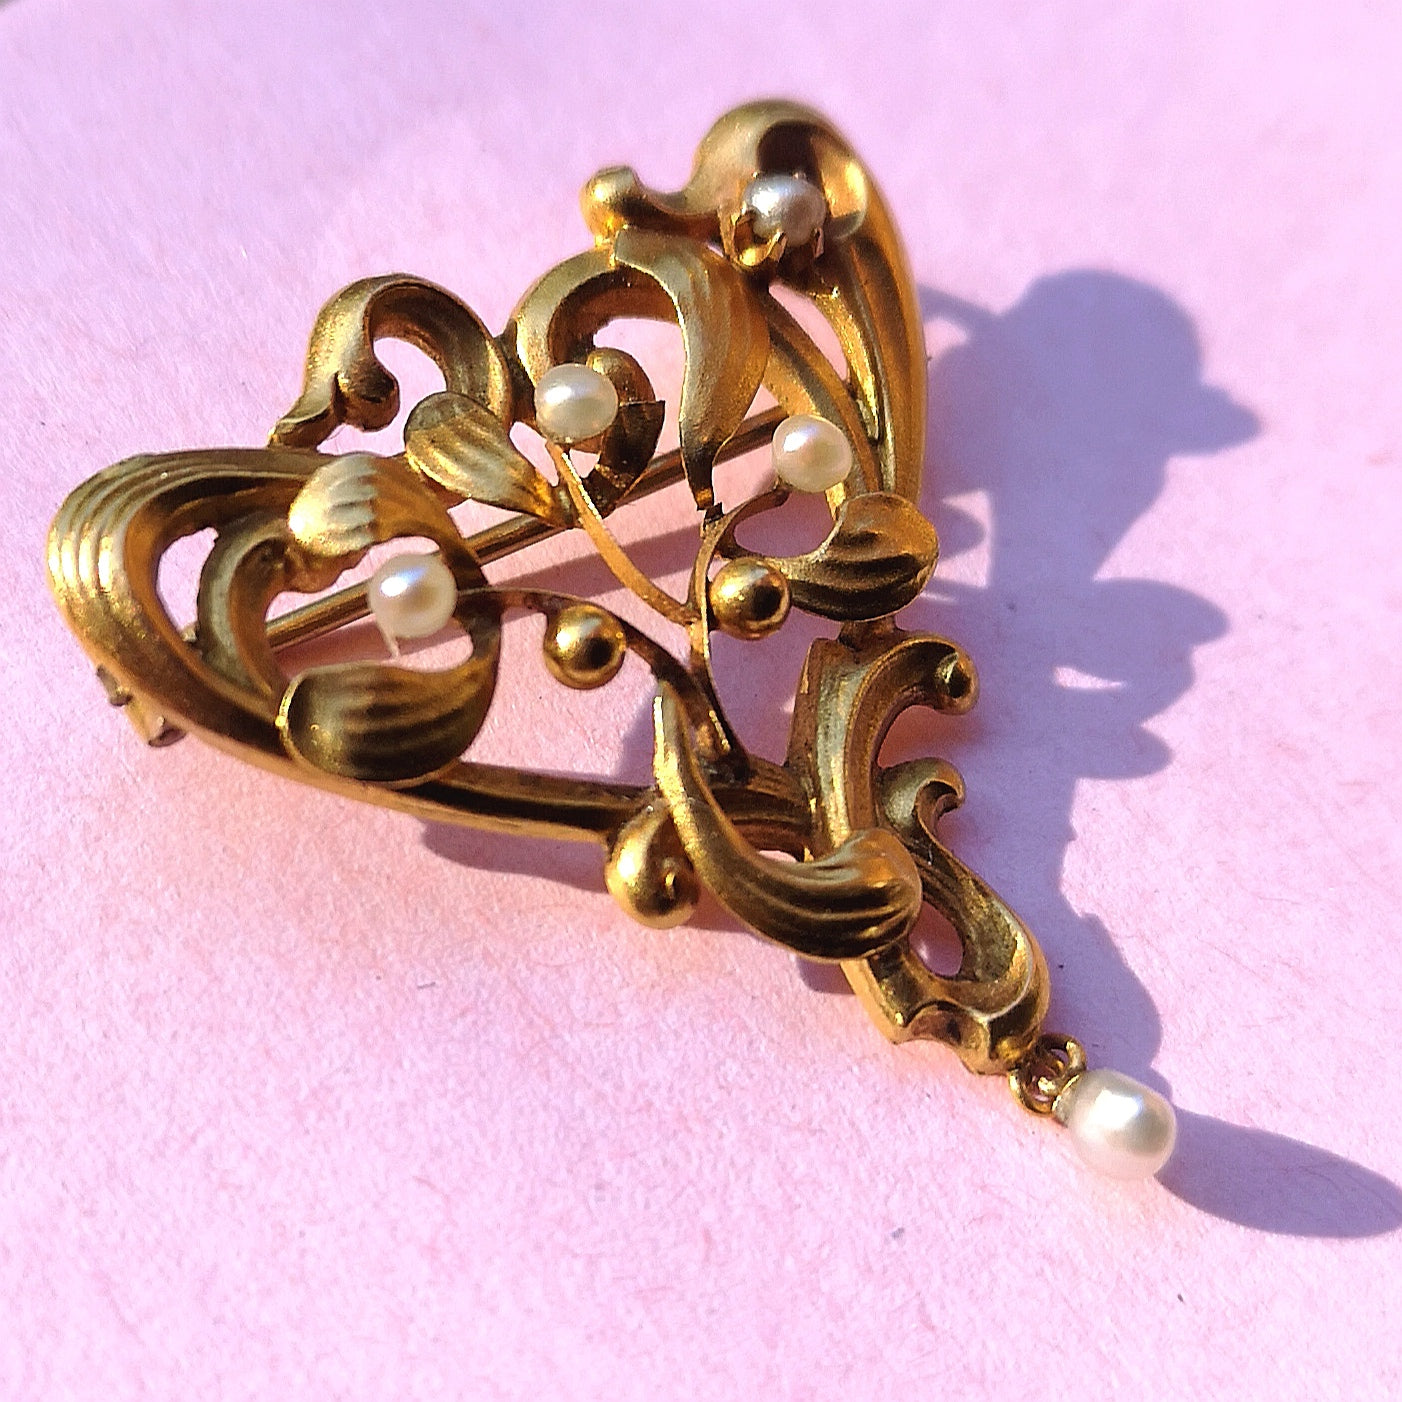 The Art Nouveau mistletoe gold and pearl brooch - Medea's Mix